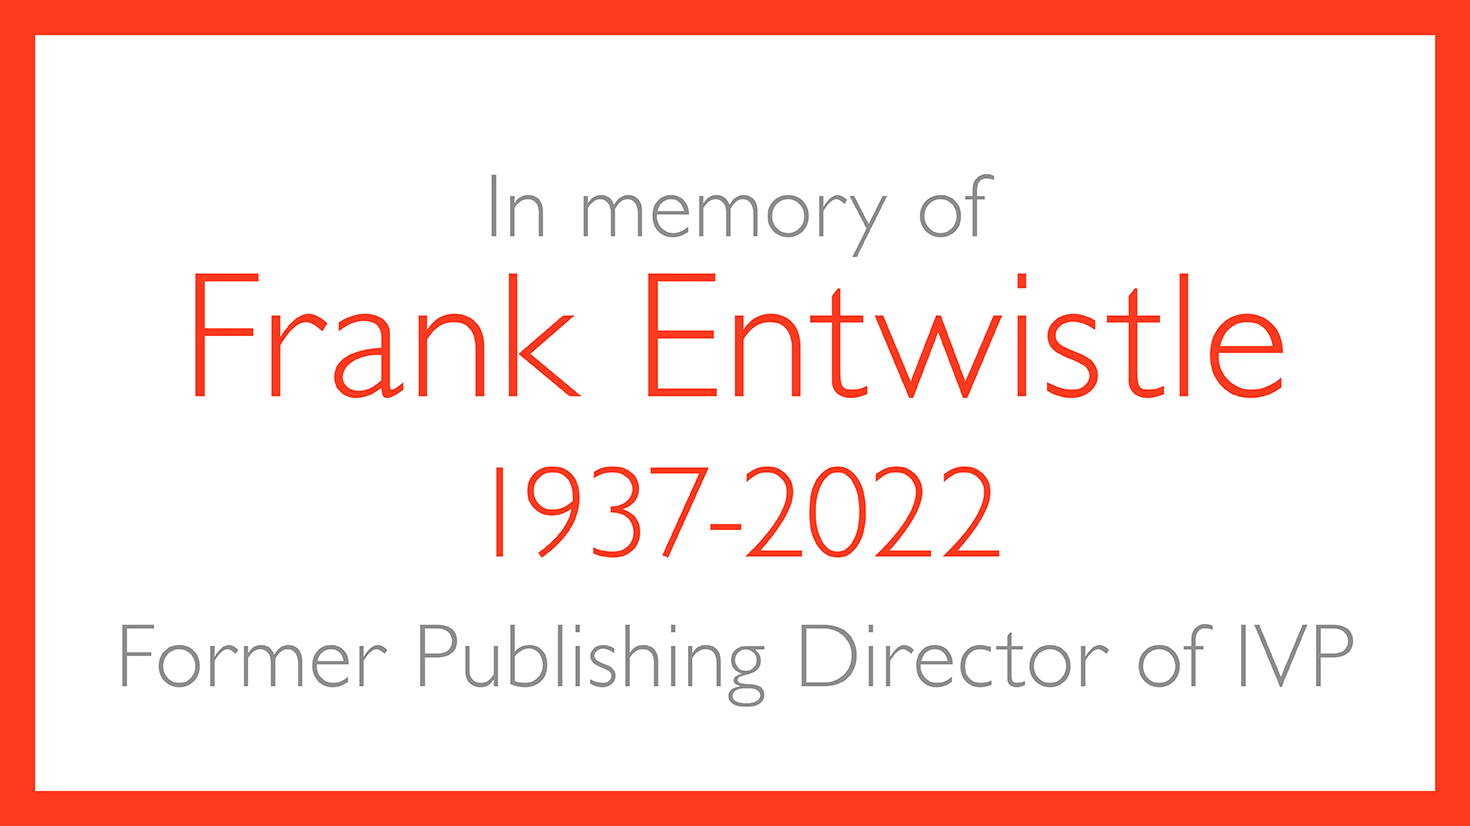 In memory of Frank Entwistle, 1937-2022